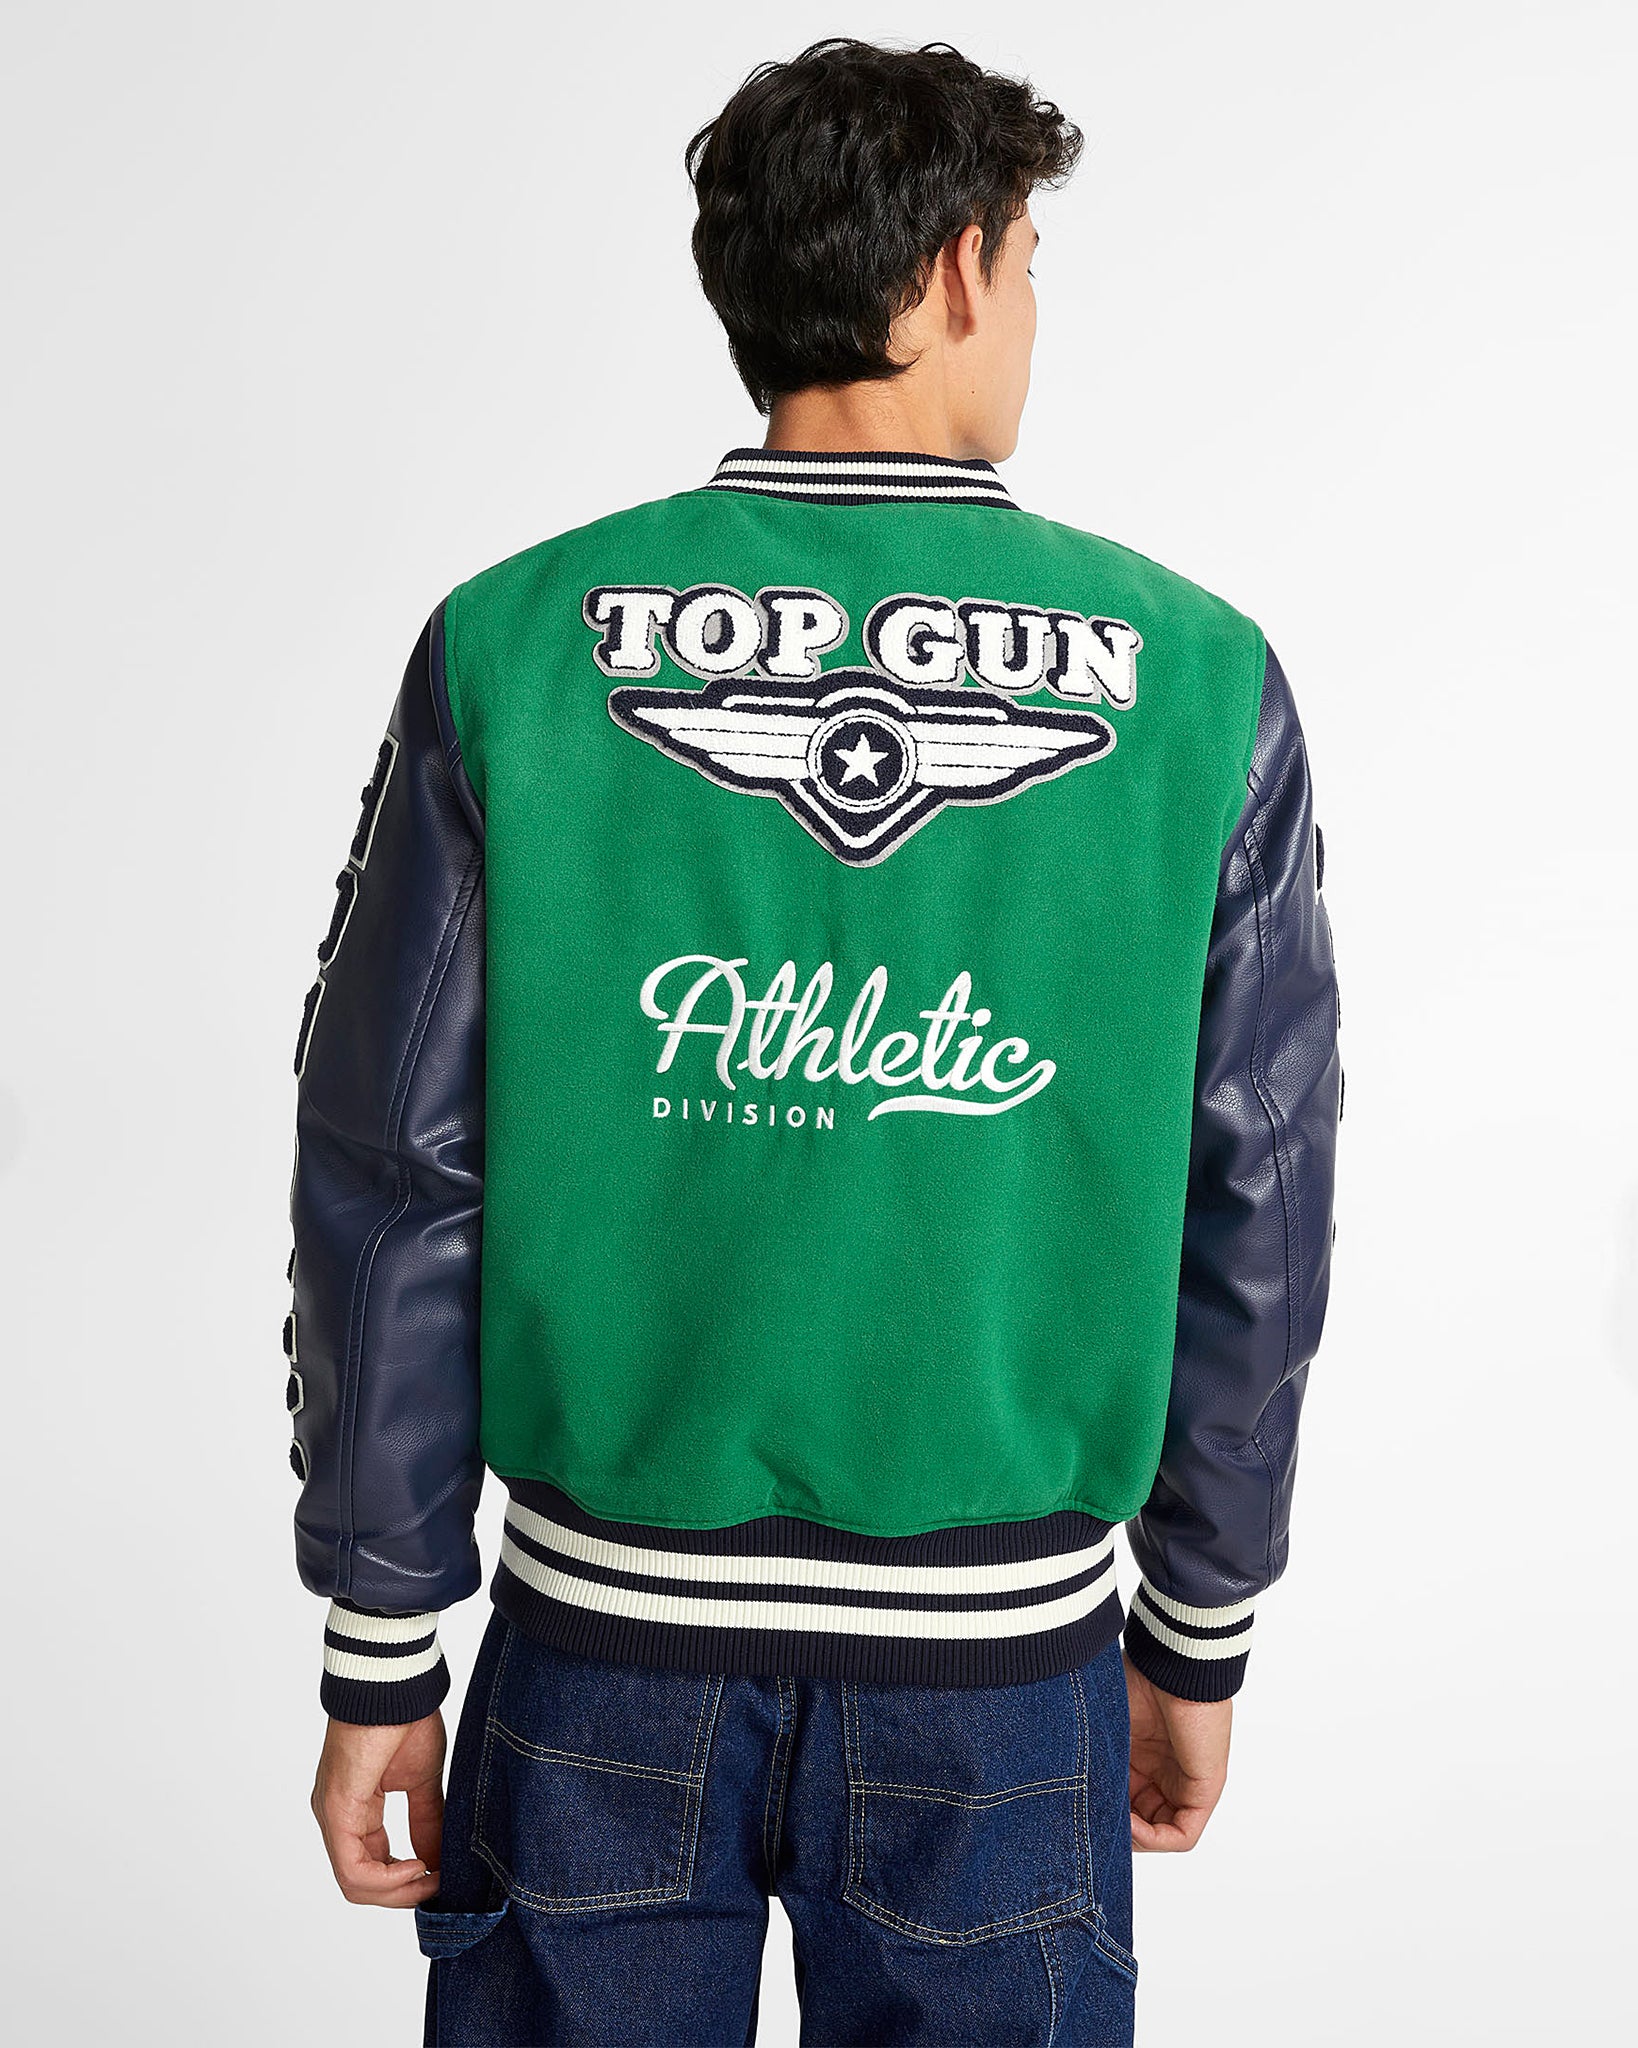 Official Top Gun Store: Jackets, Clothing, Merchandise for Men & Women